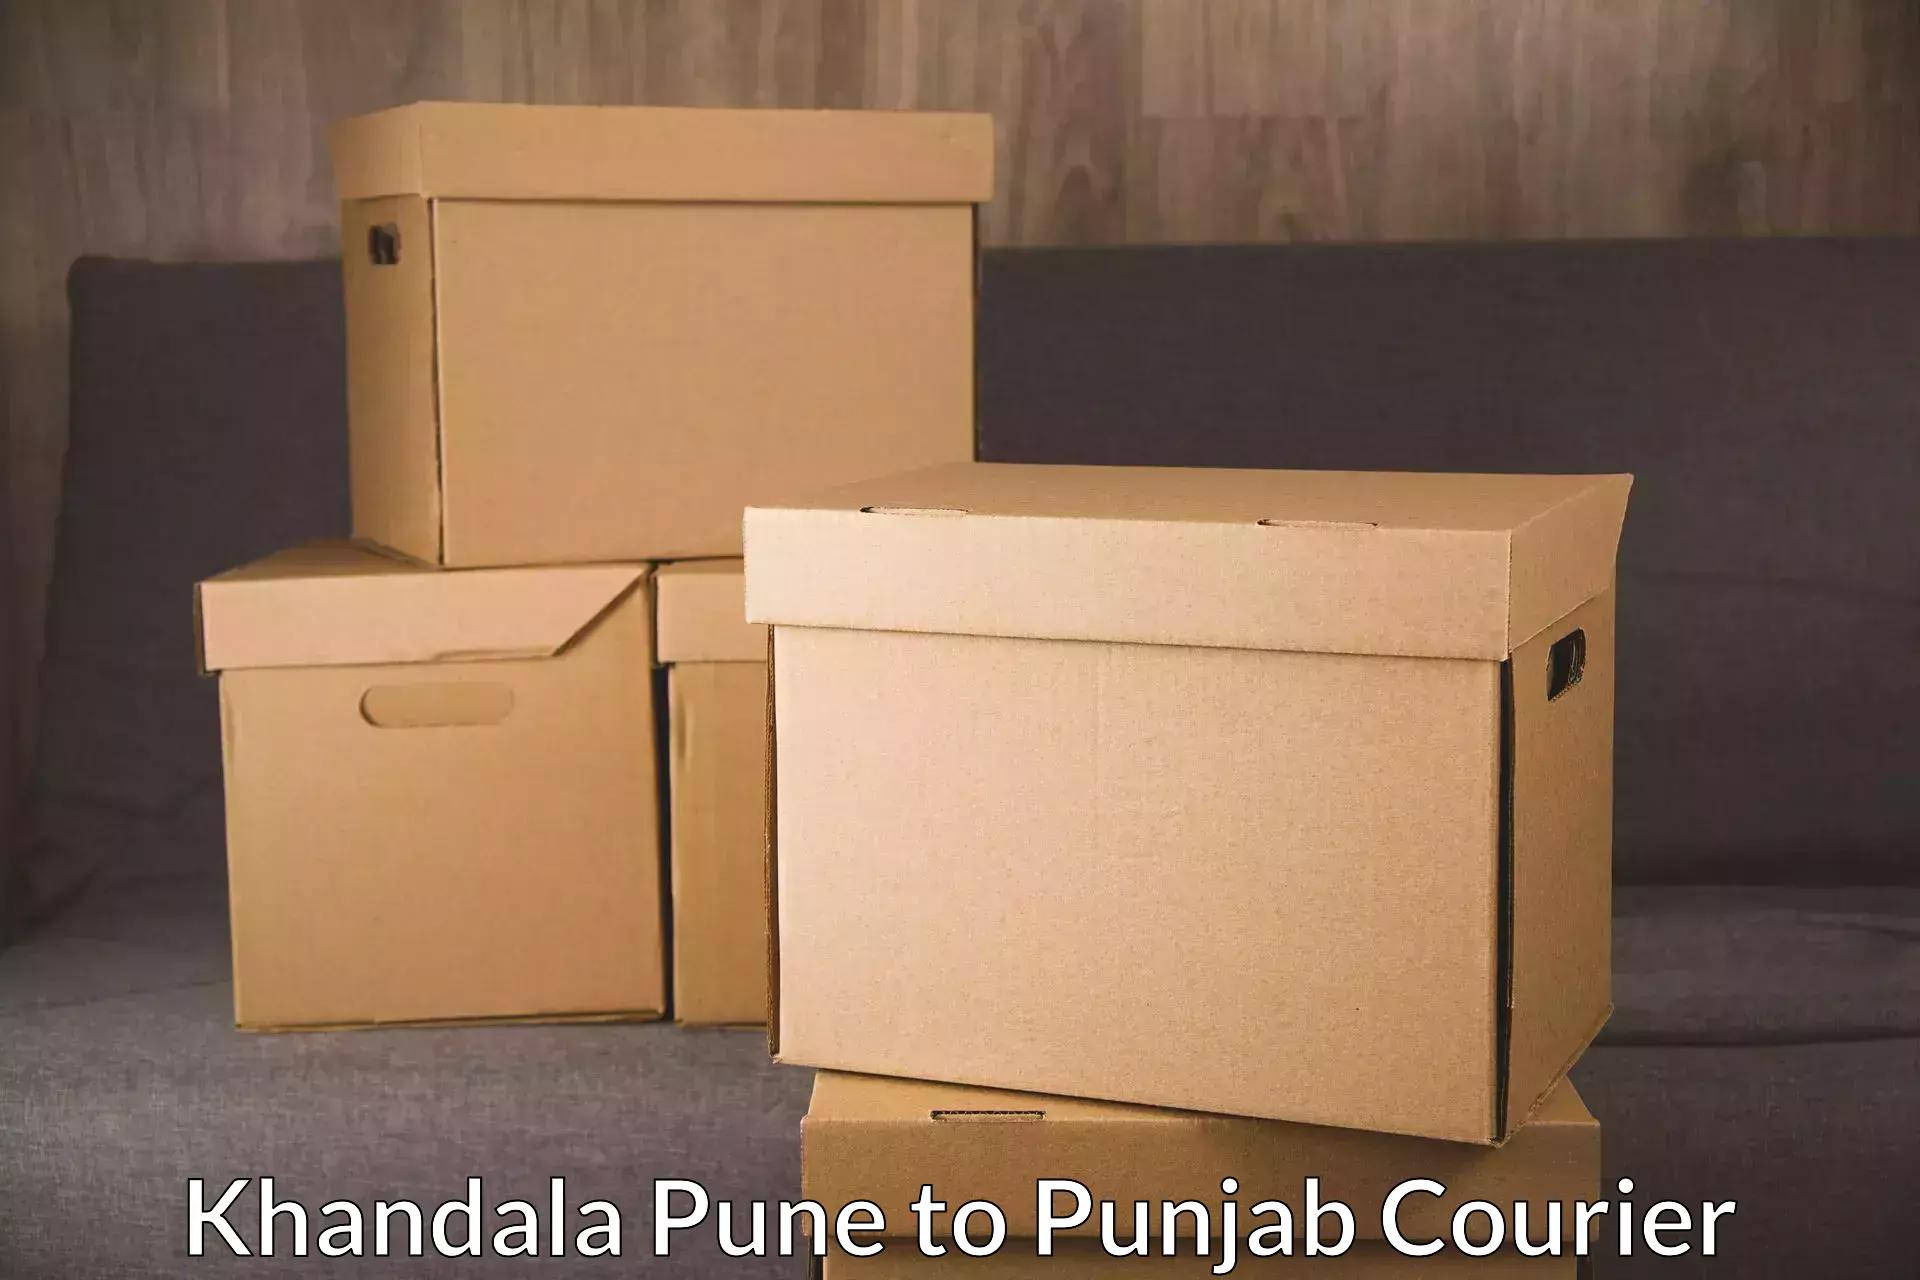 Advanced parcel tracking Khandala Pune to Mohali